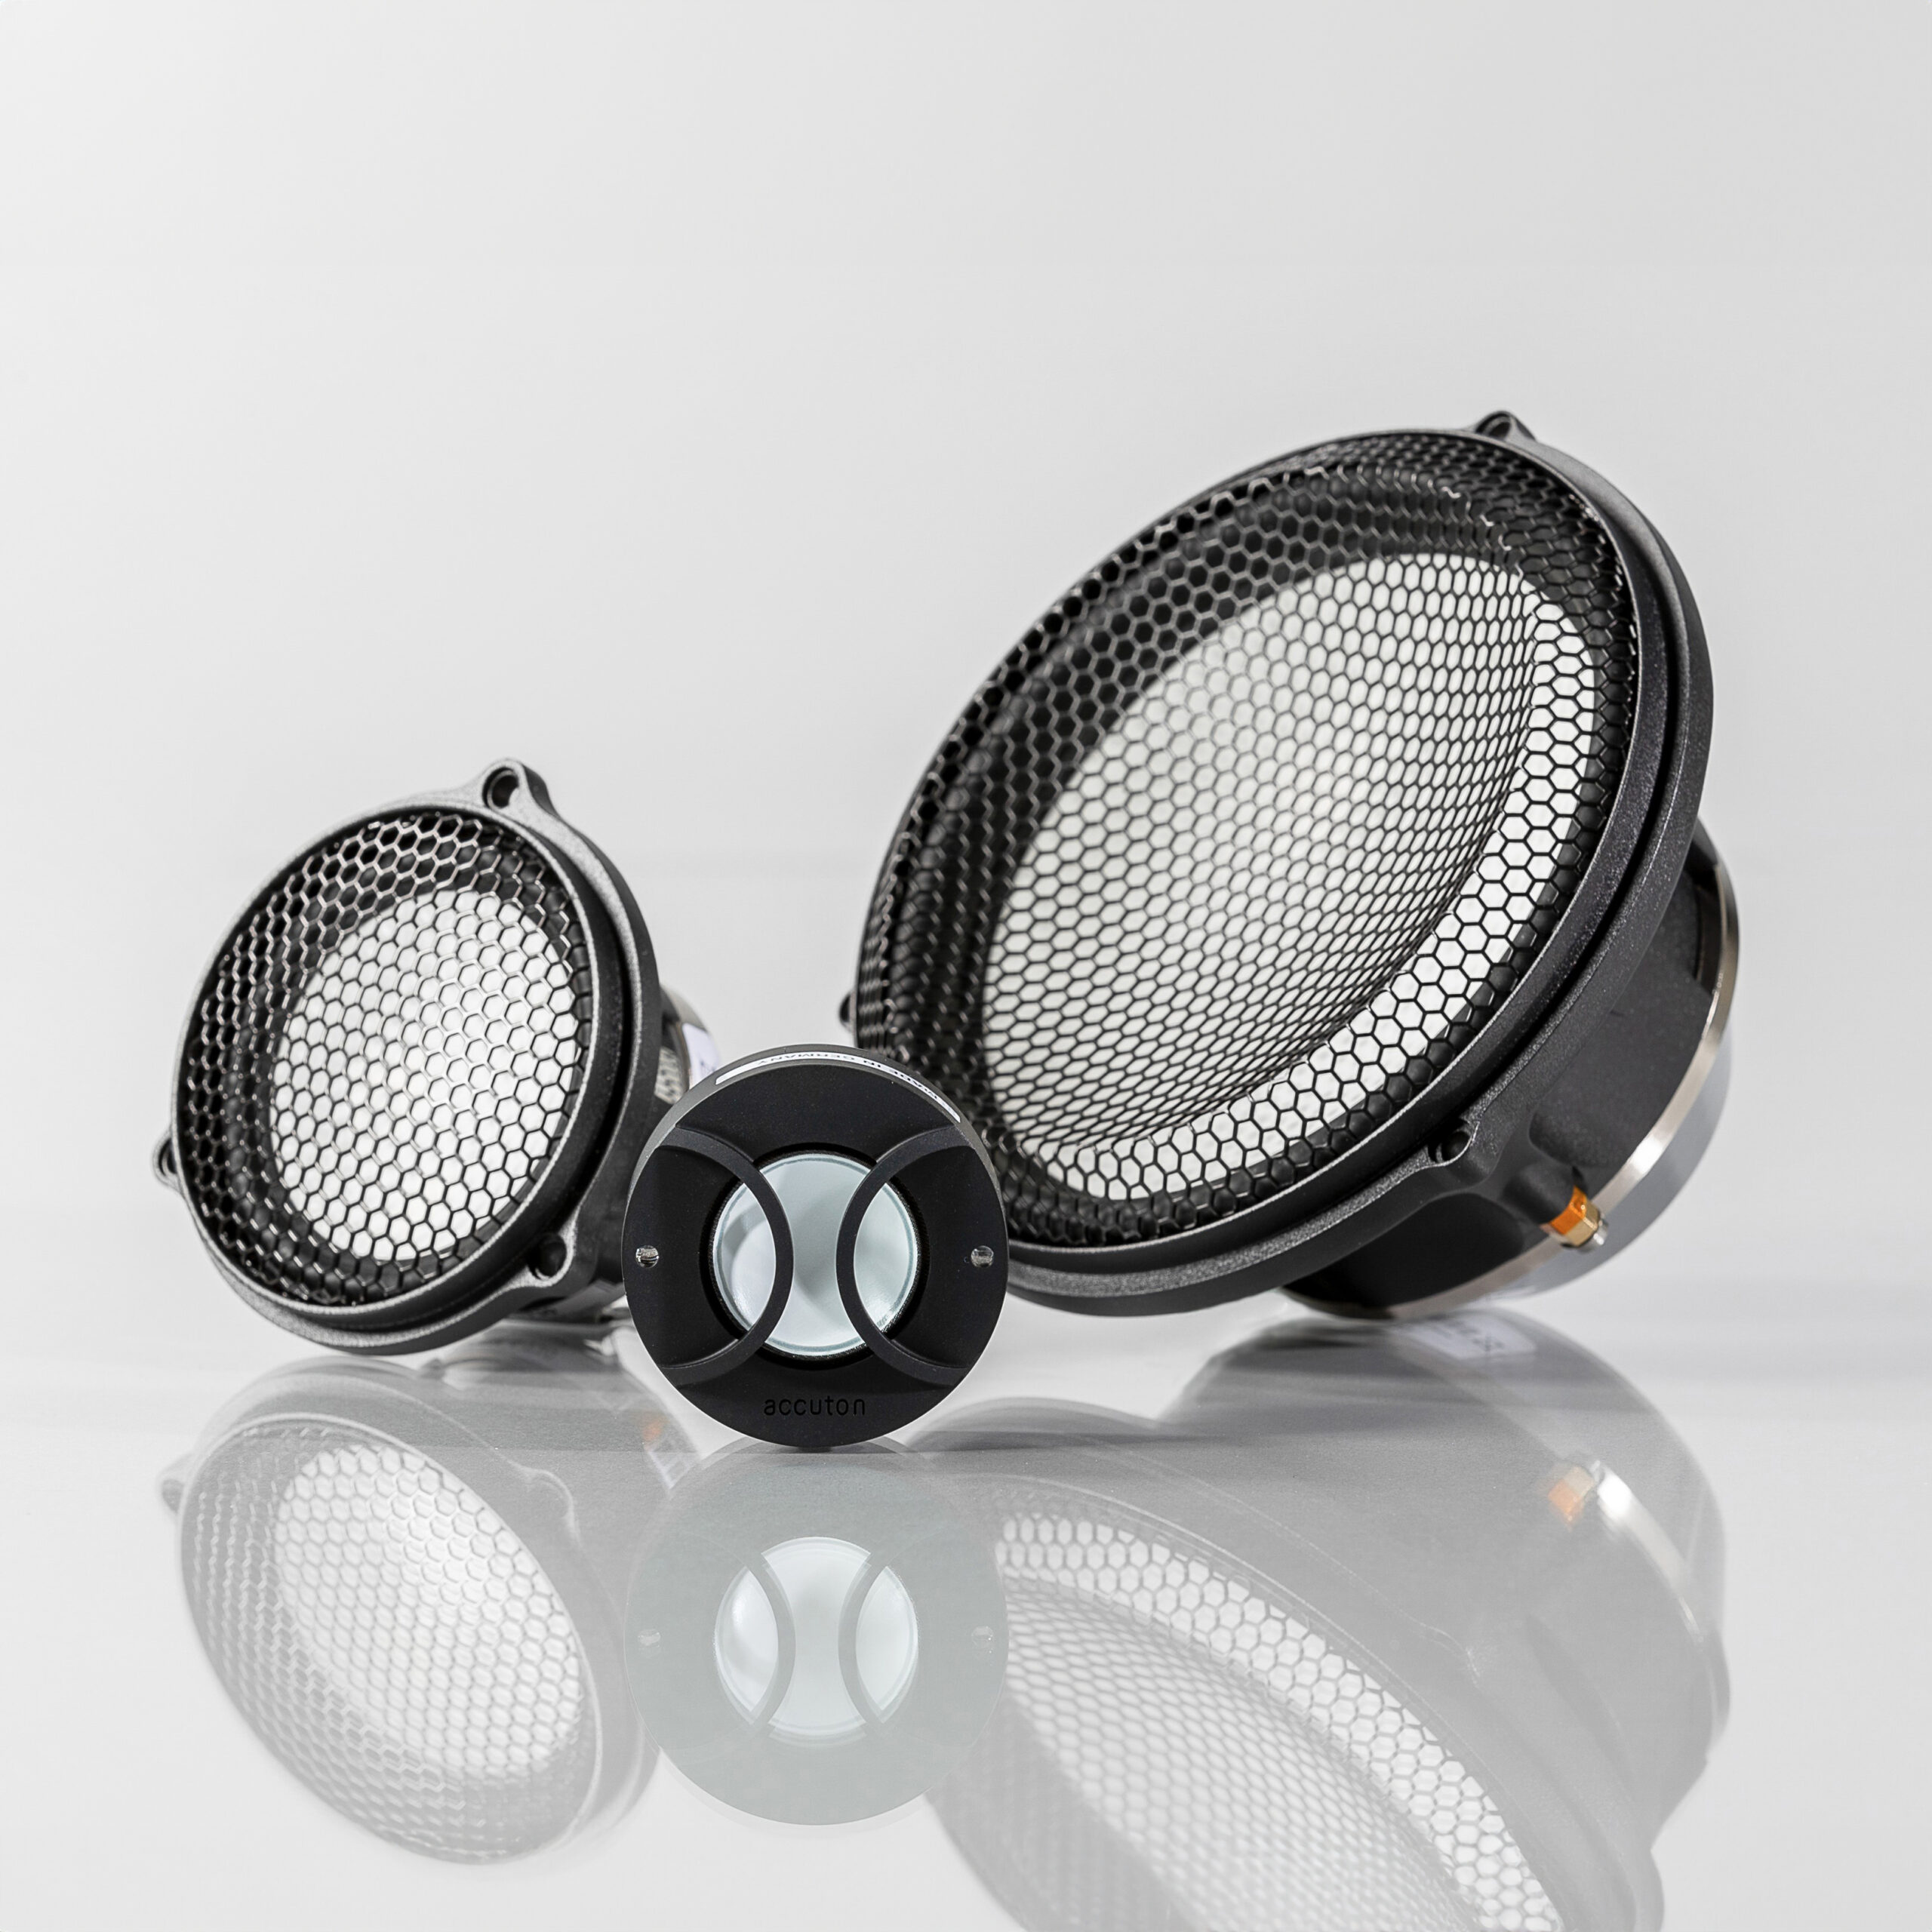 Accuton Automotive Ceramic Speakers ResoNix Sound Solutions High End Car Audio Speakers Tweeter Midrange Midbass